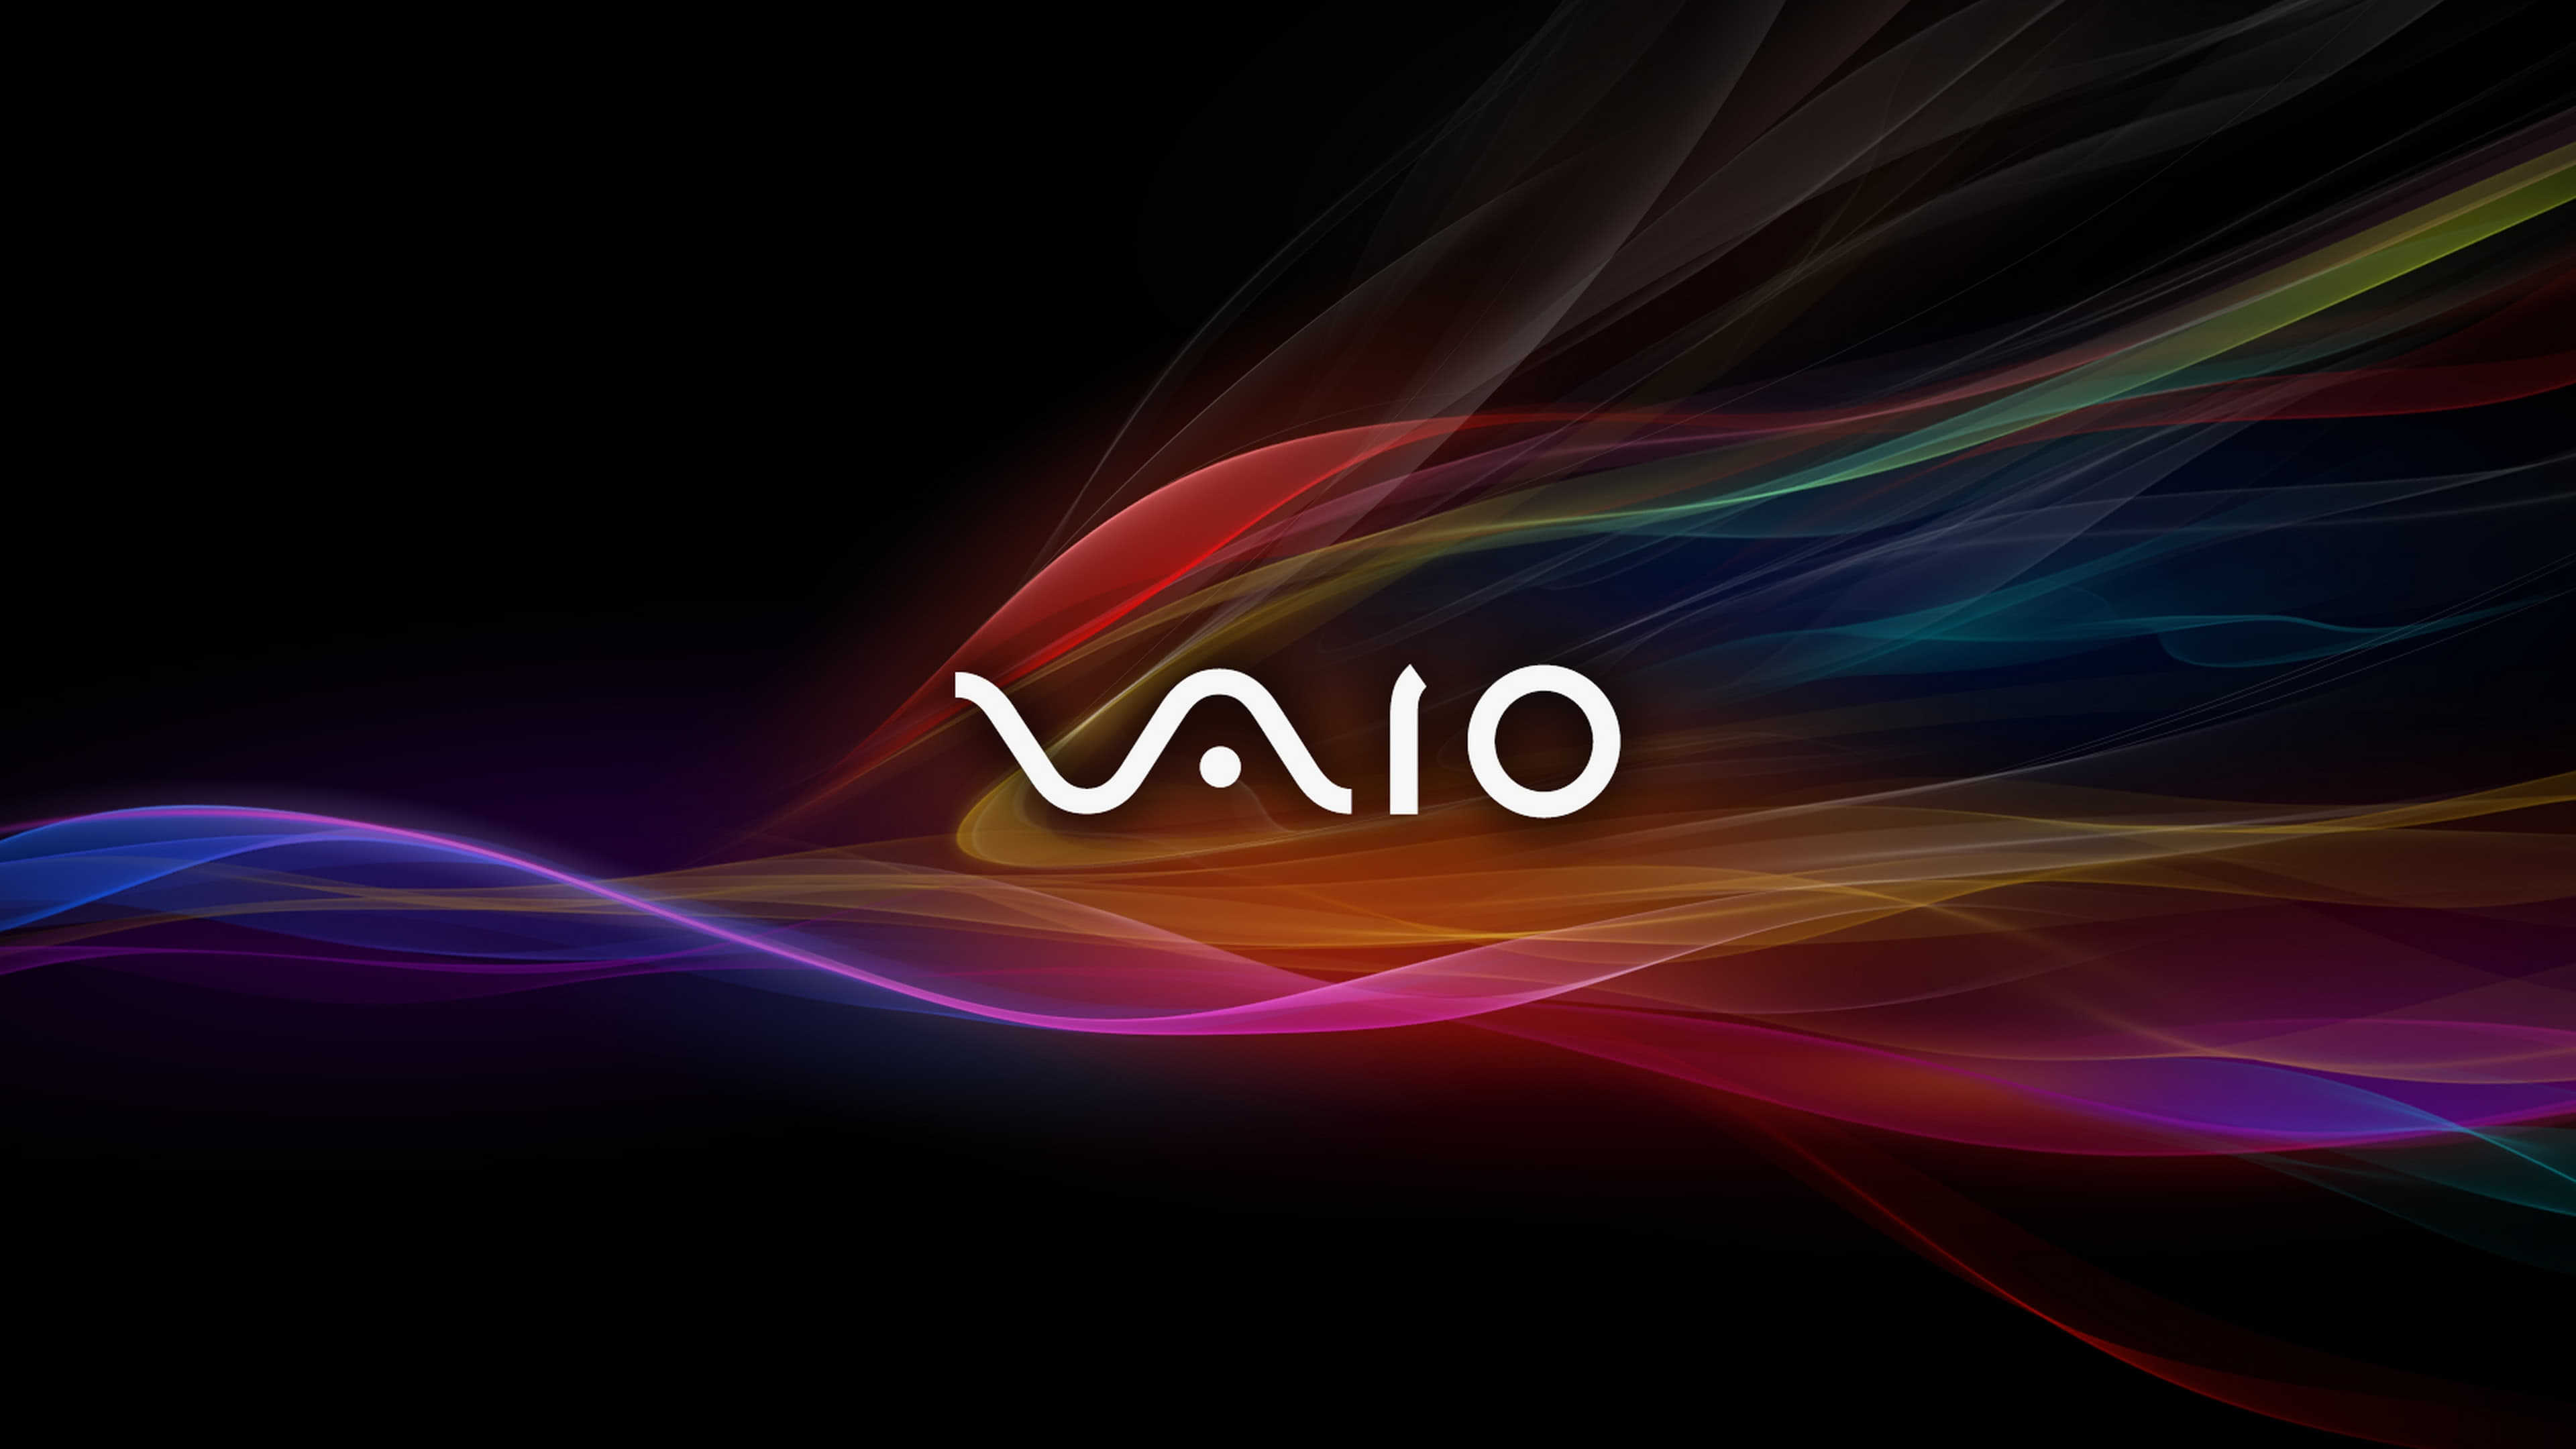 Vaio Logo - Sony Vaio Logo UHD 4K Wallpaper | Pixelz